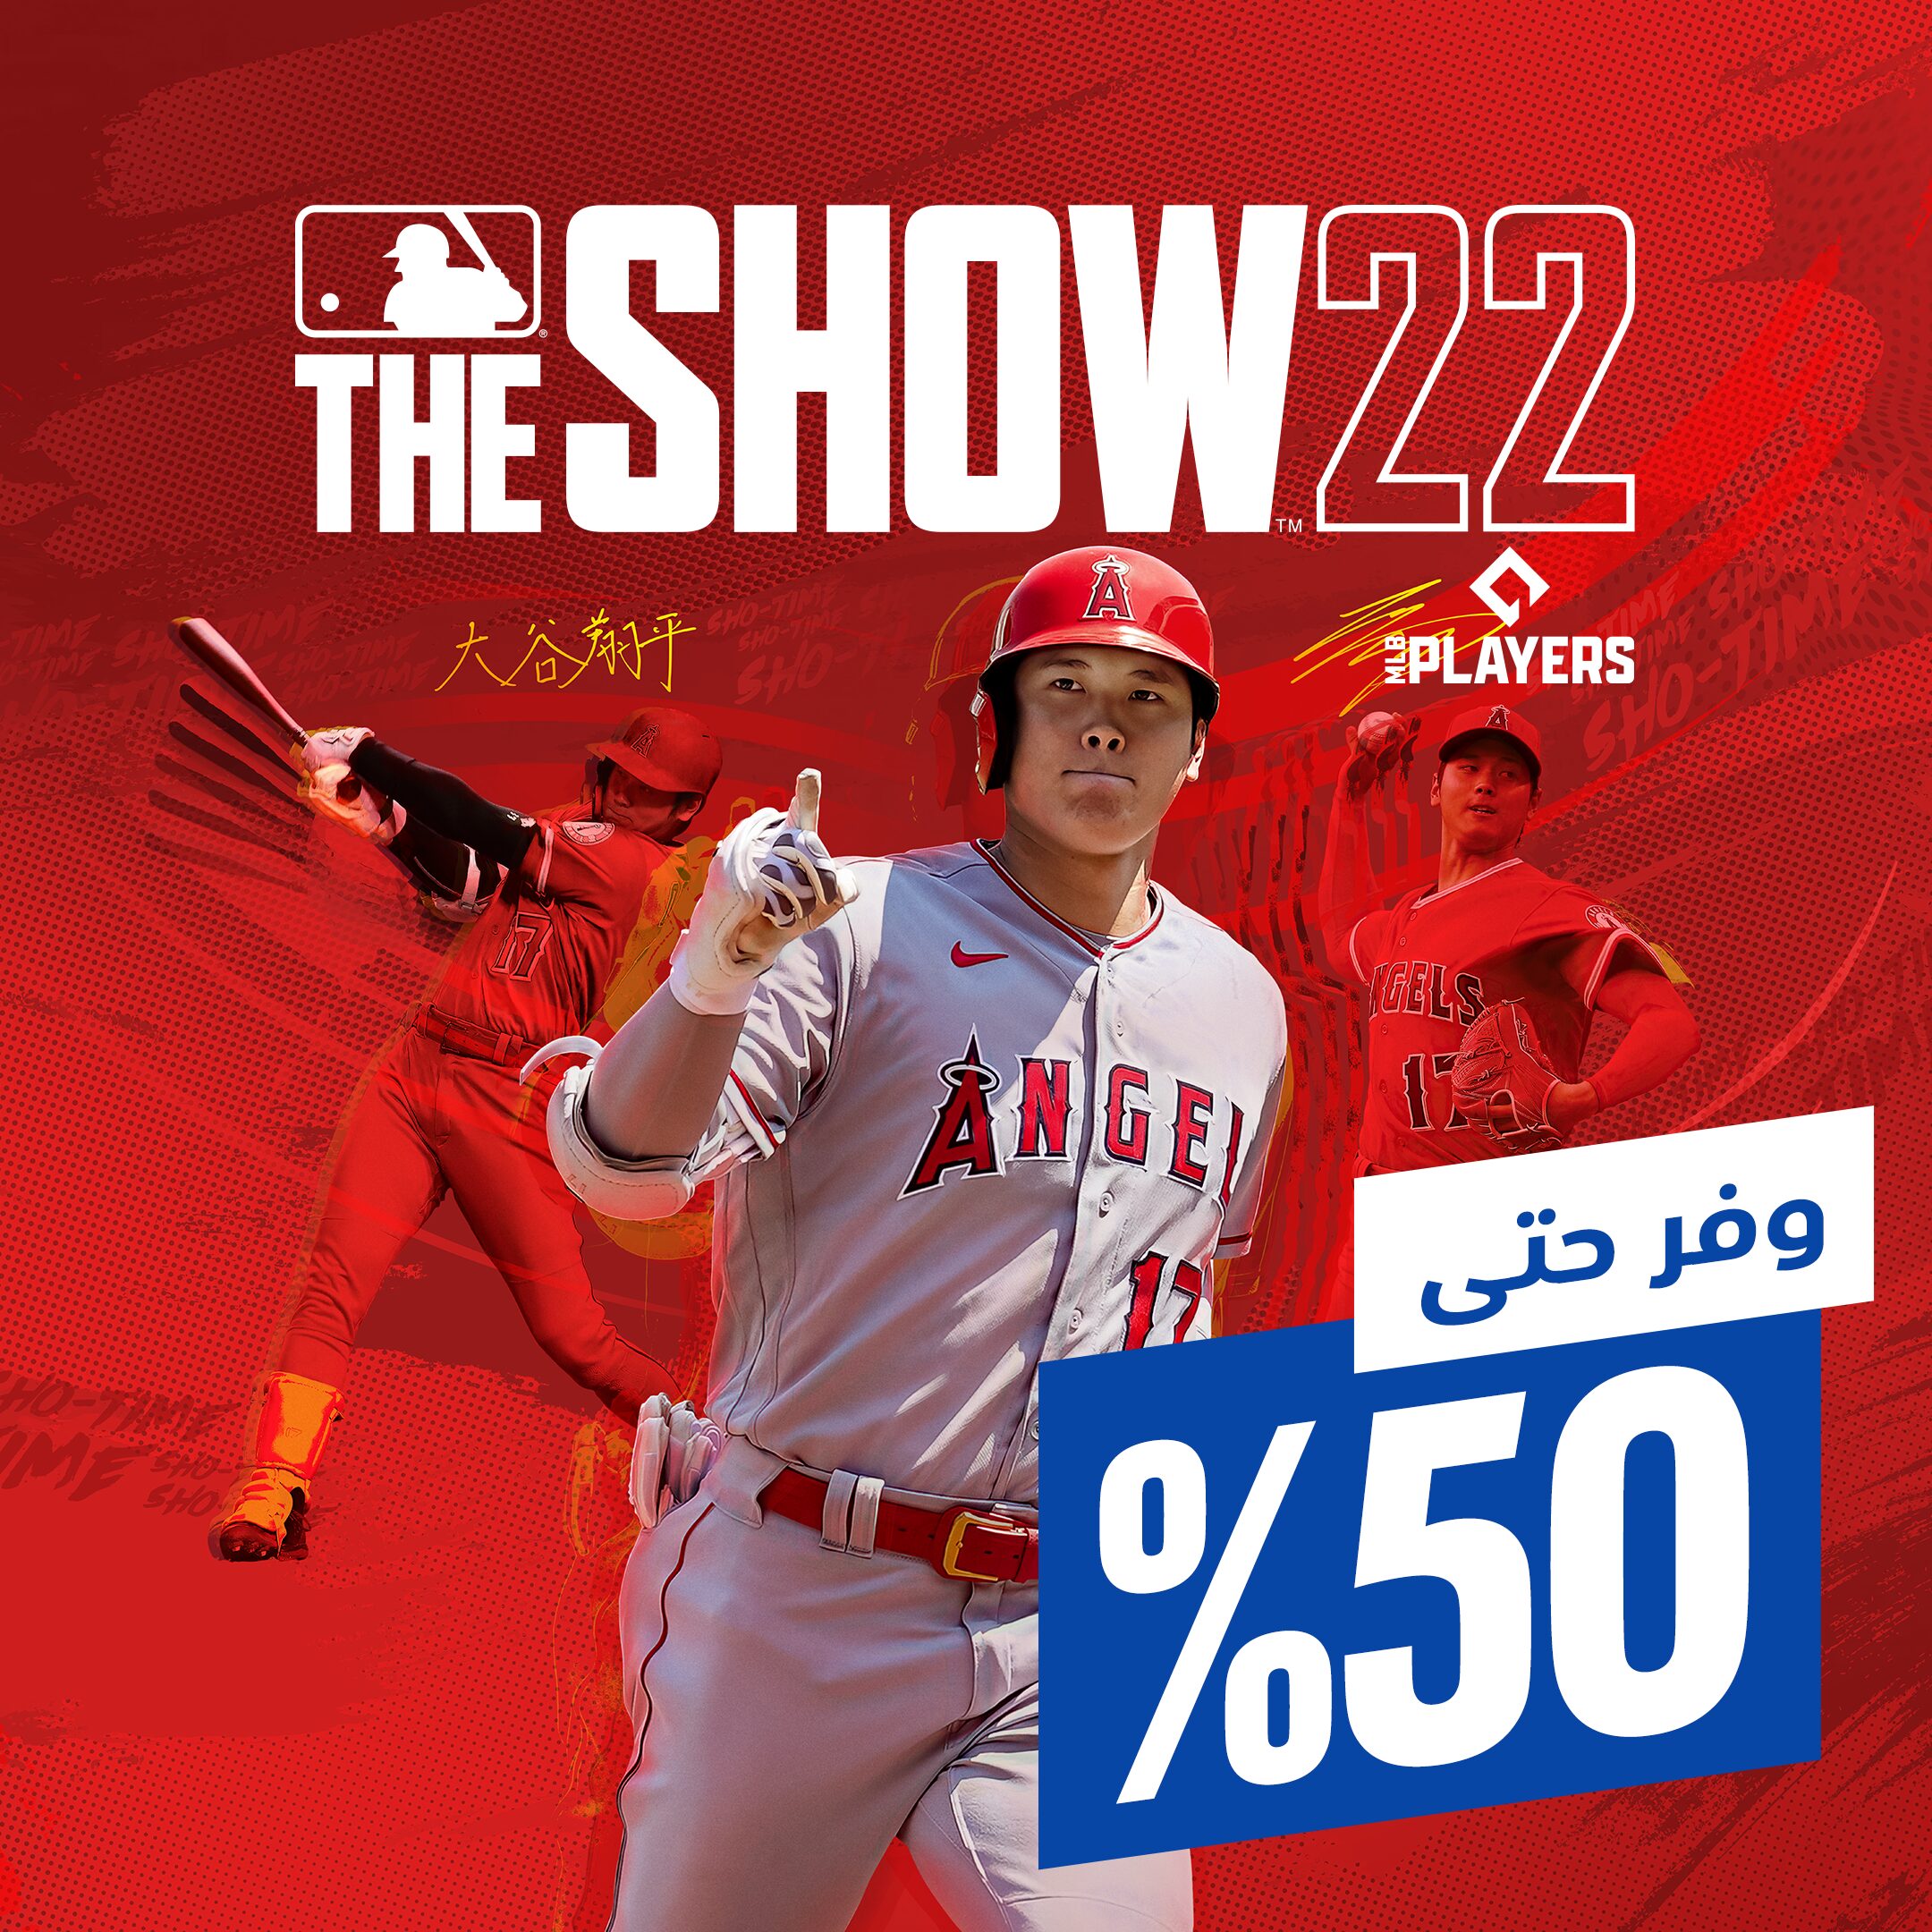 [PROMO] MLB Ad-Hoc Offer